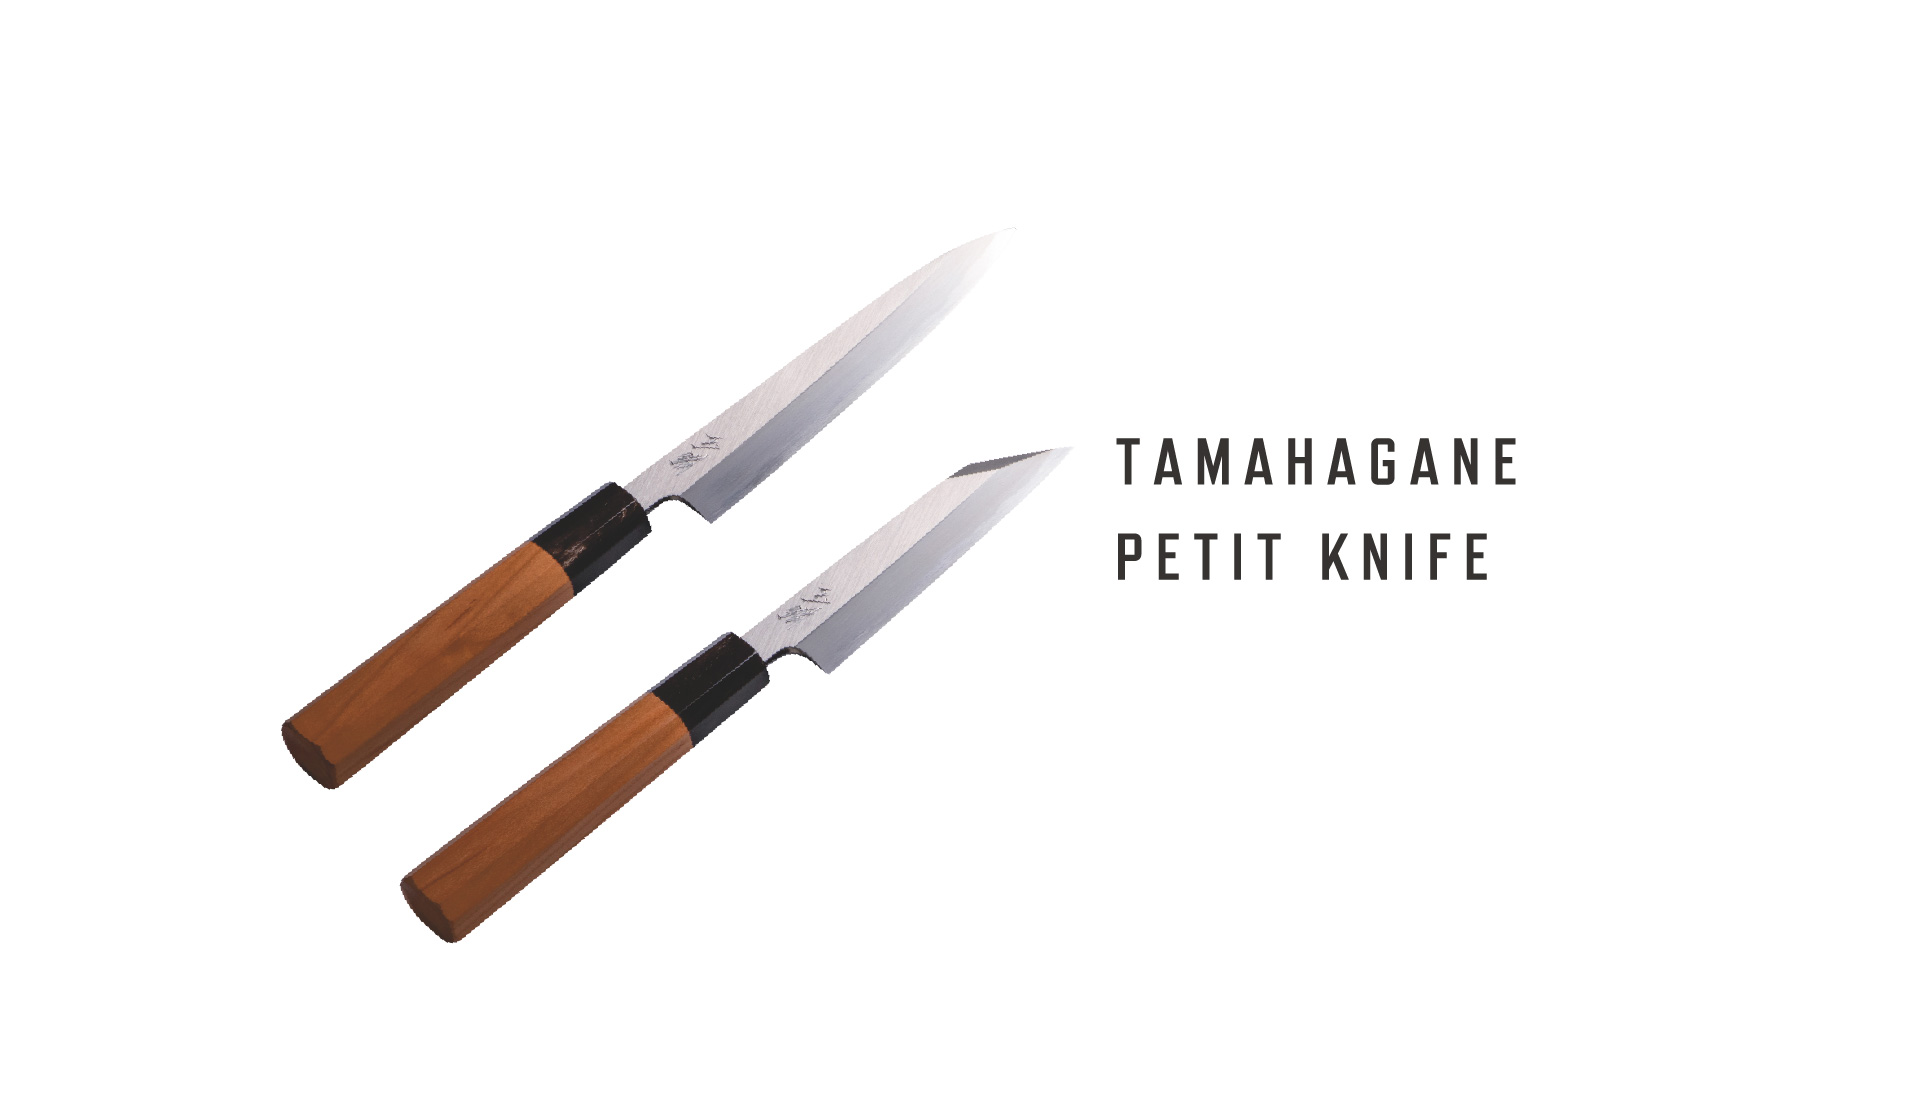 TAMAHAGANE PETIT KNIFE